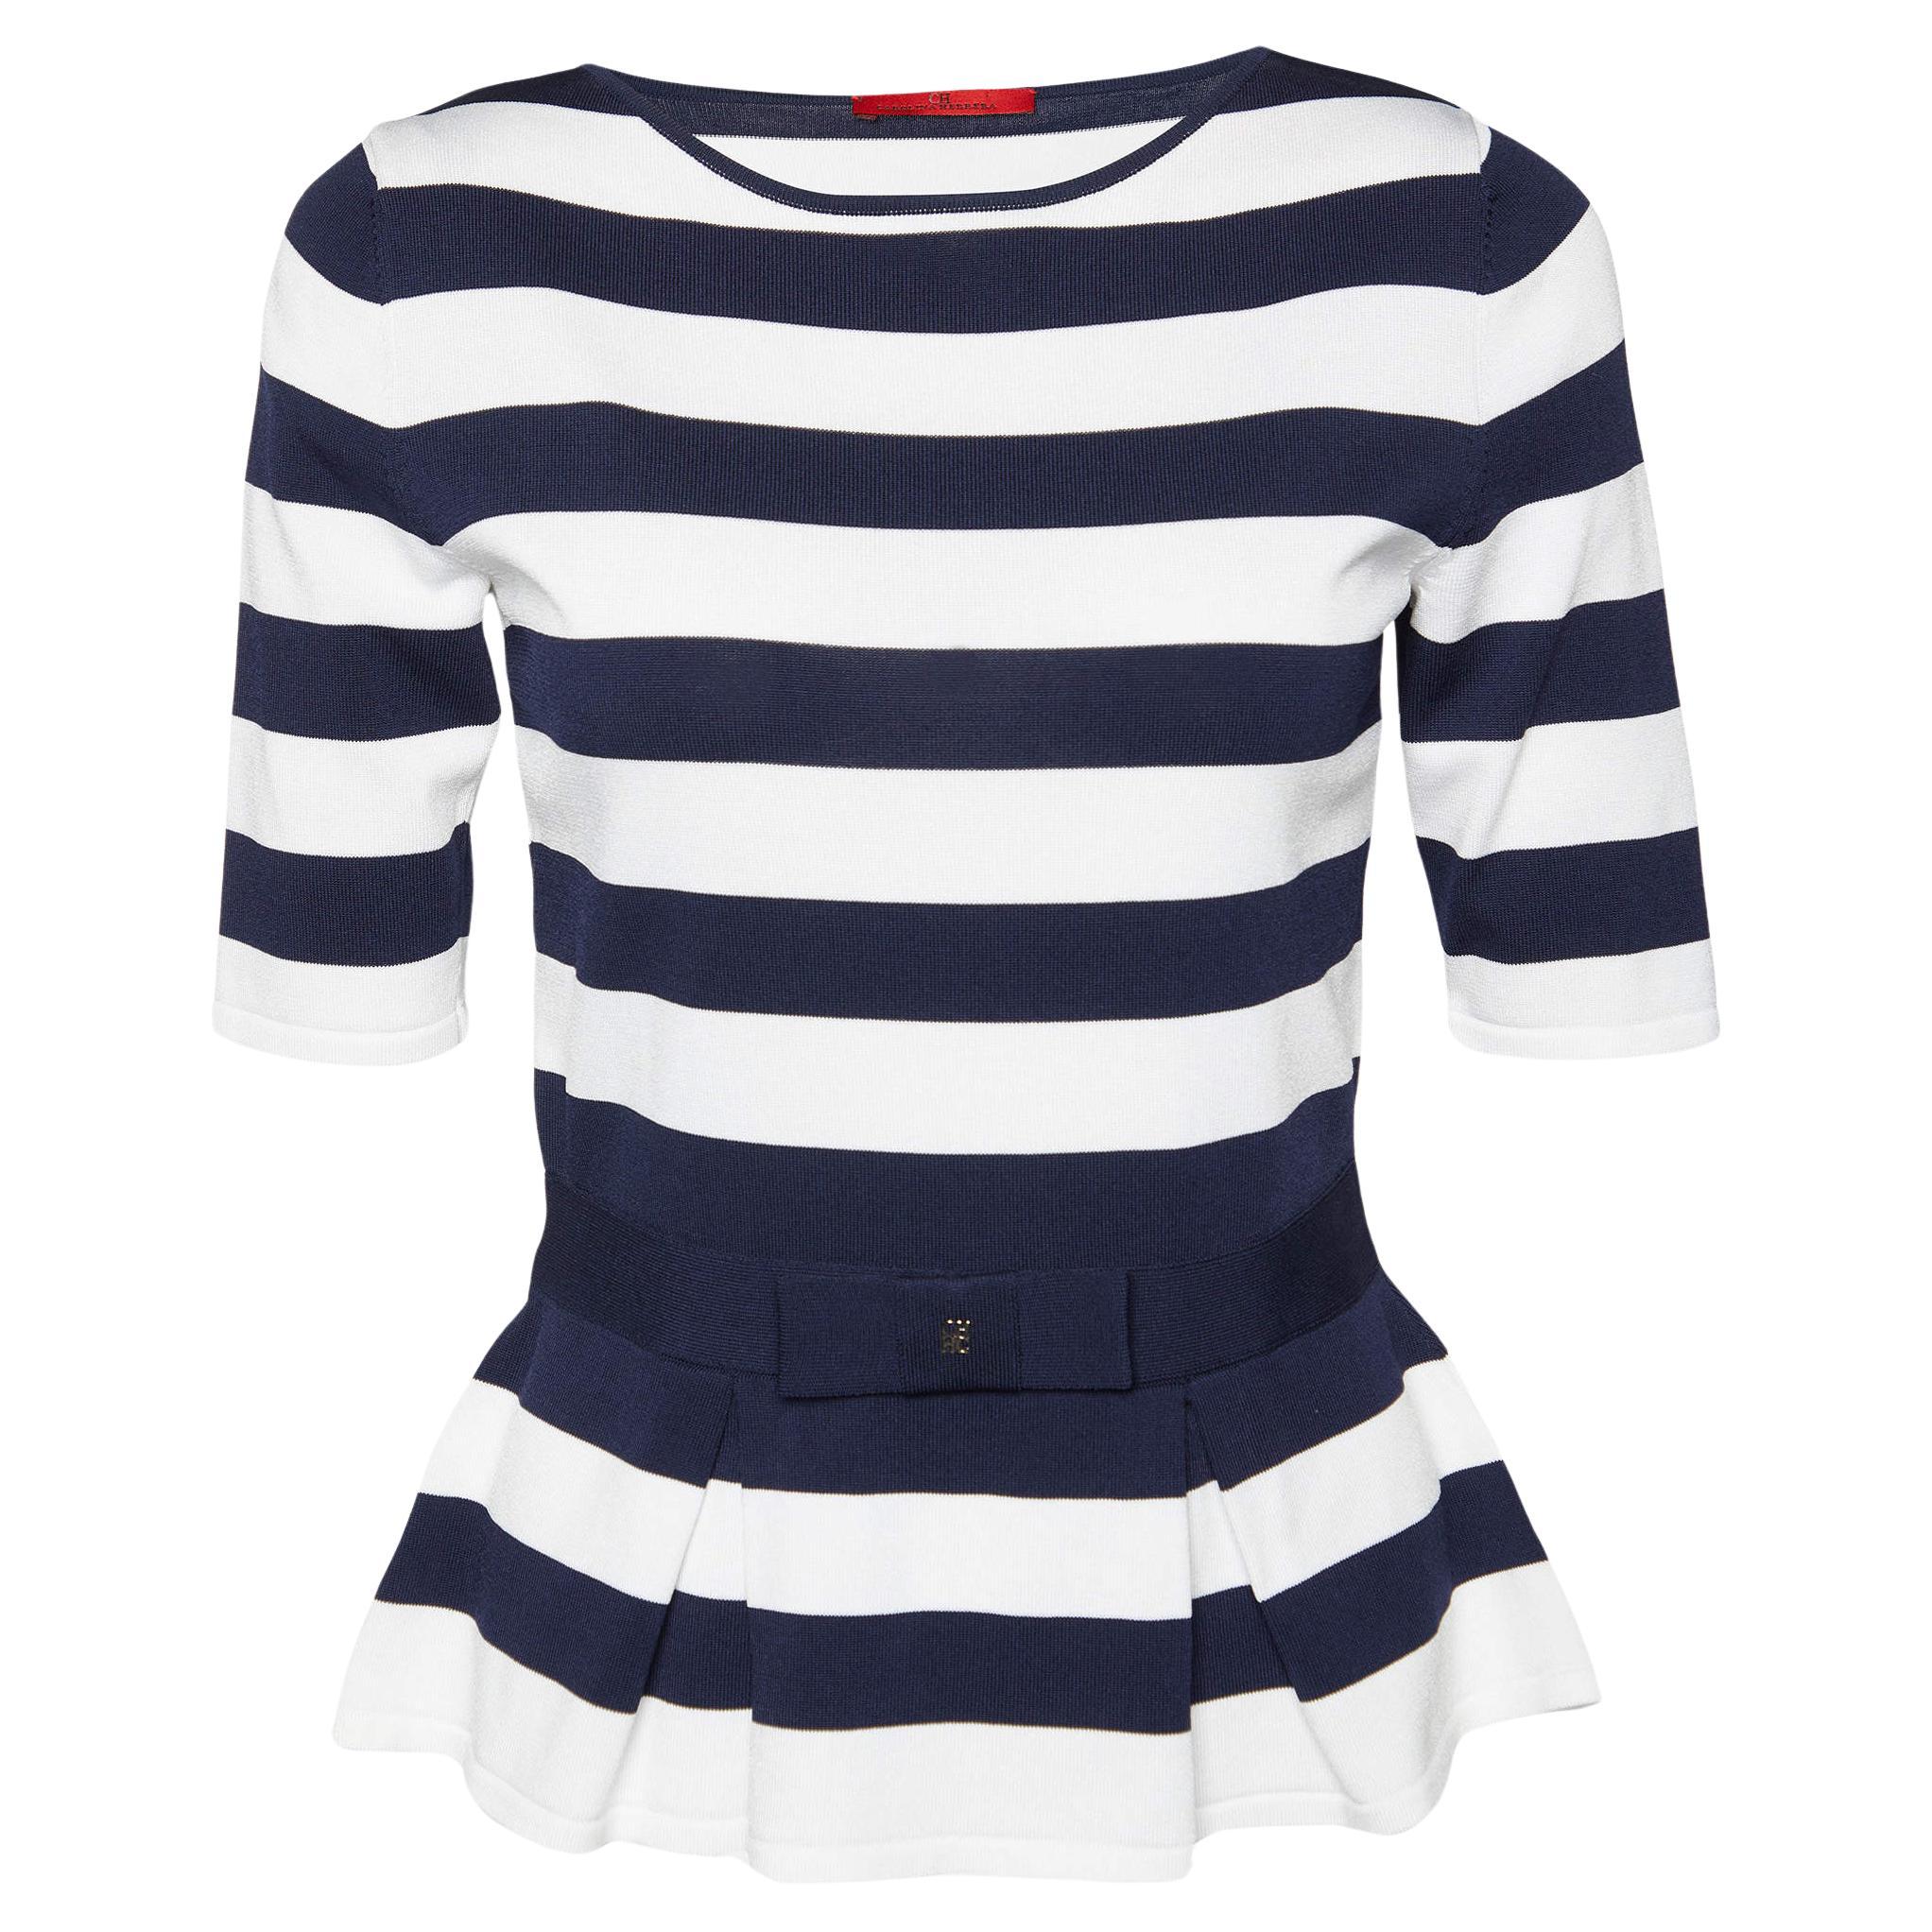 CH Carolina Herrera Navy Blue/White Striped Knit Peplum Top S